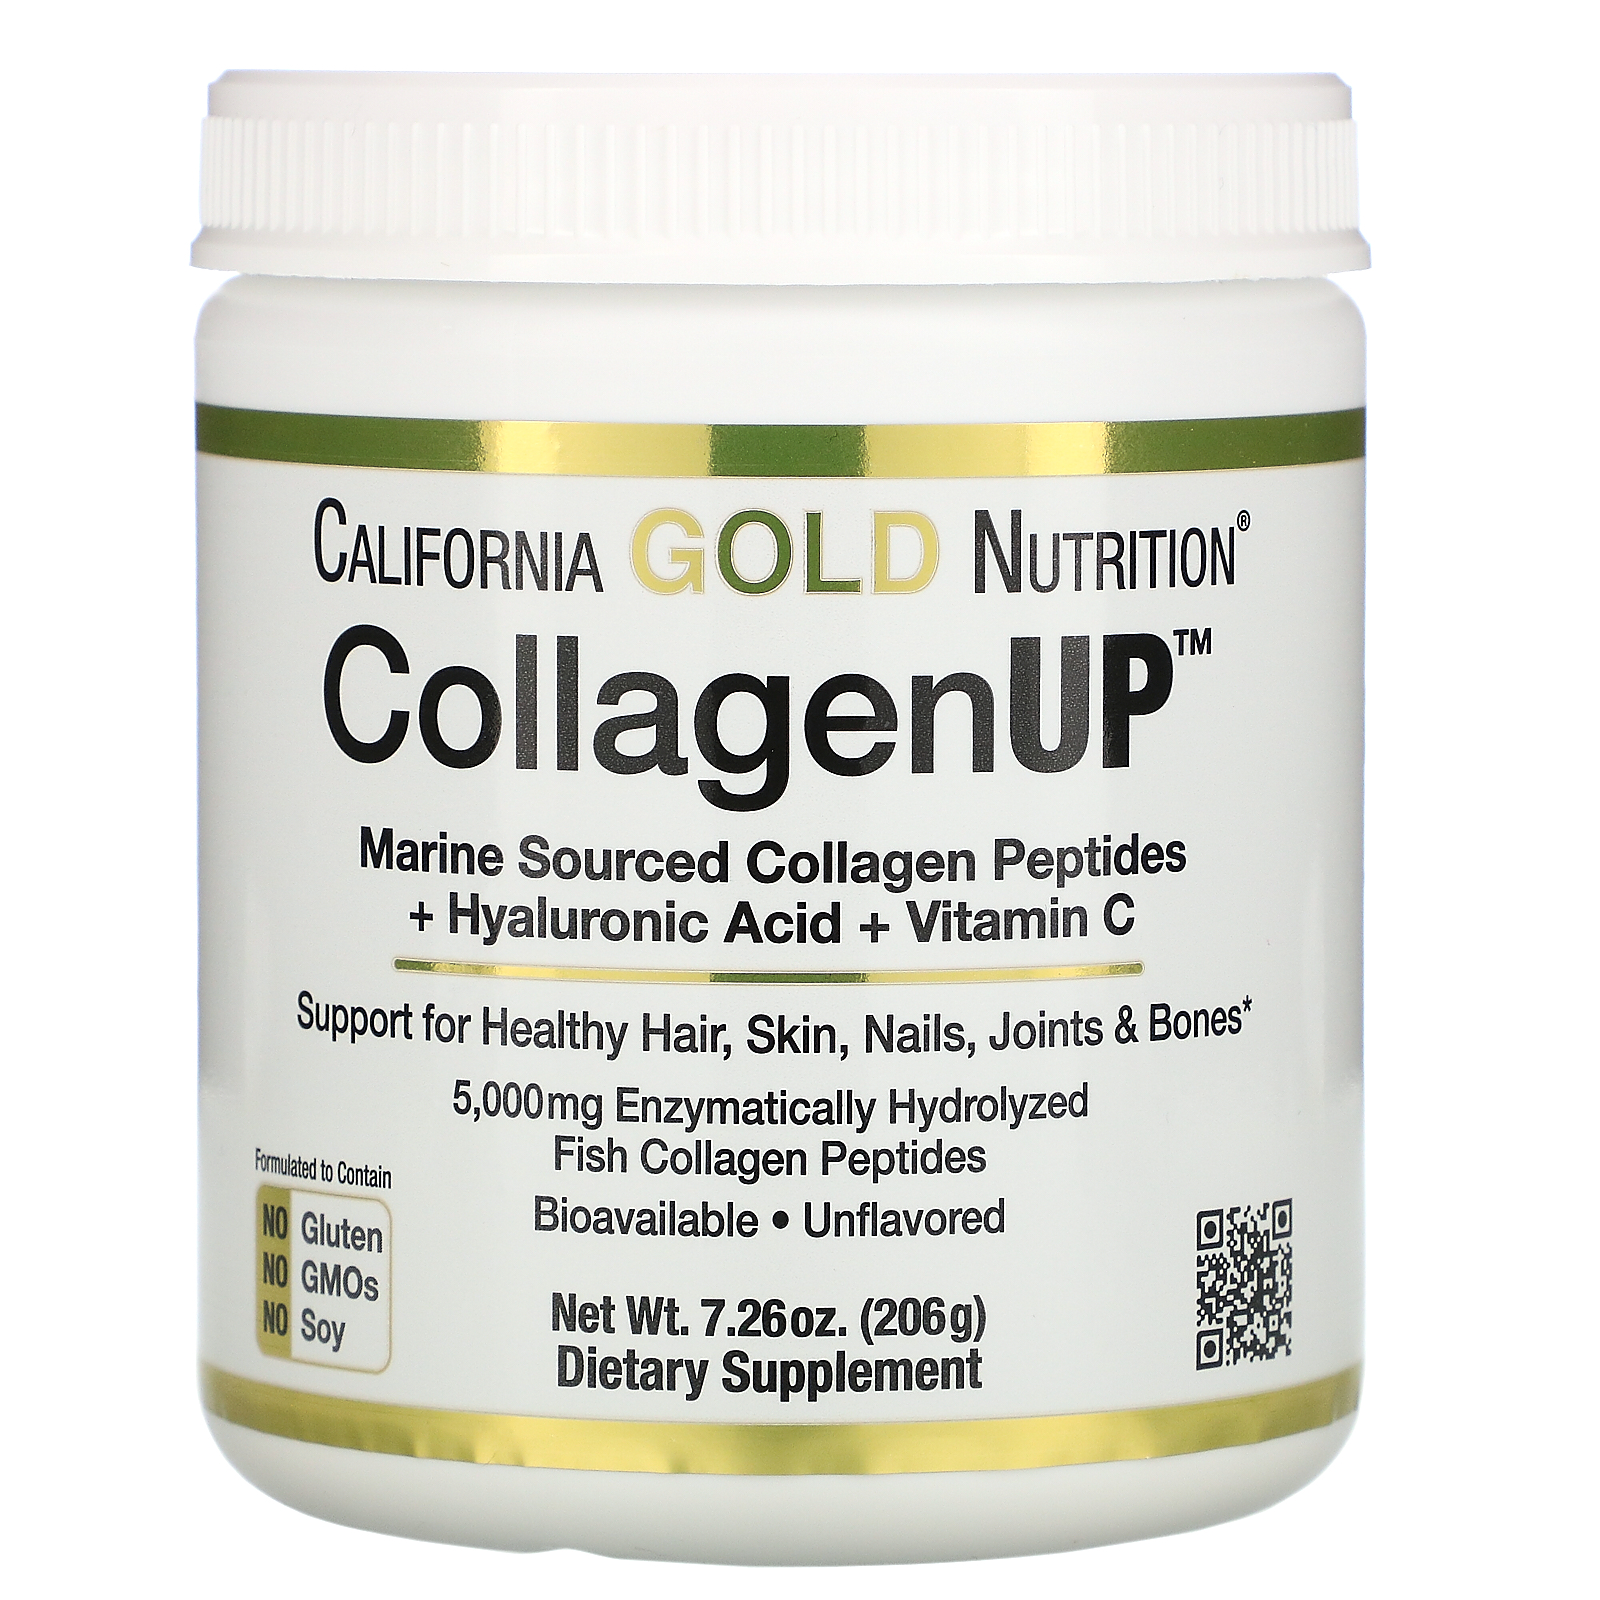 https://sa.iherb.com/pr/California-Gold-Nutrition-CollagenUP-Marine-Hydrolyzed-Collagen-Hyaluronic-Acid-Vitamin-C-Unflavored-7-26-oz-206-g/64903?rcode=CGV594